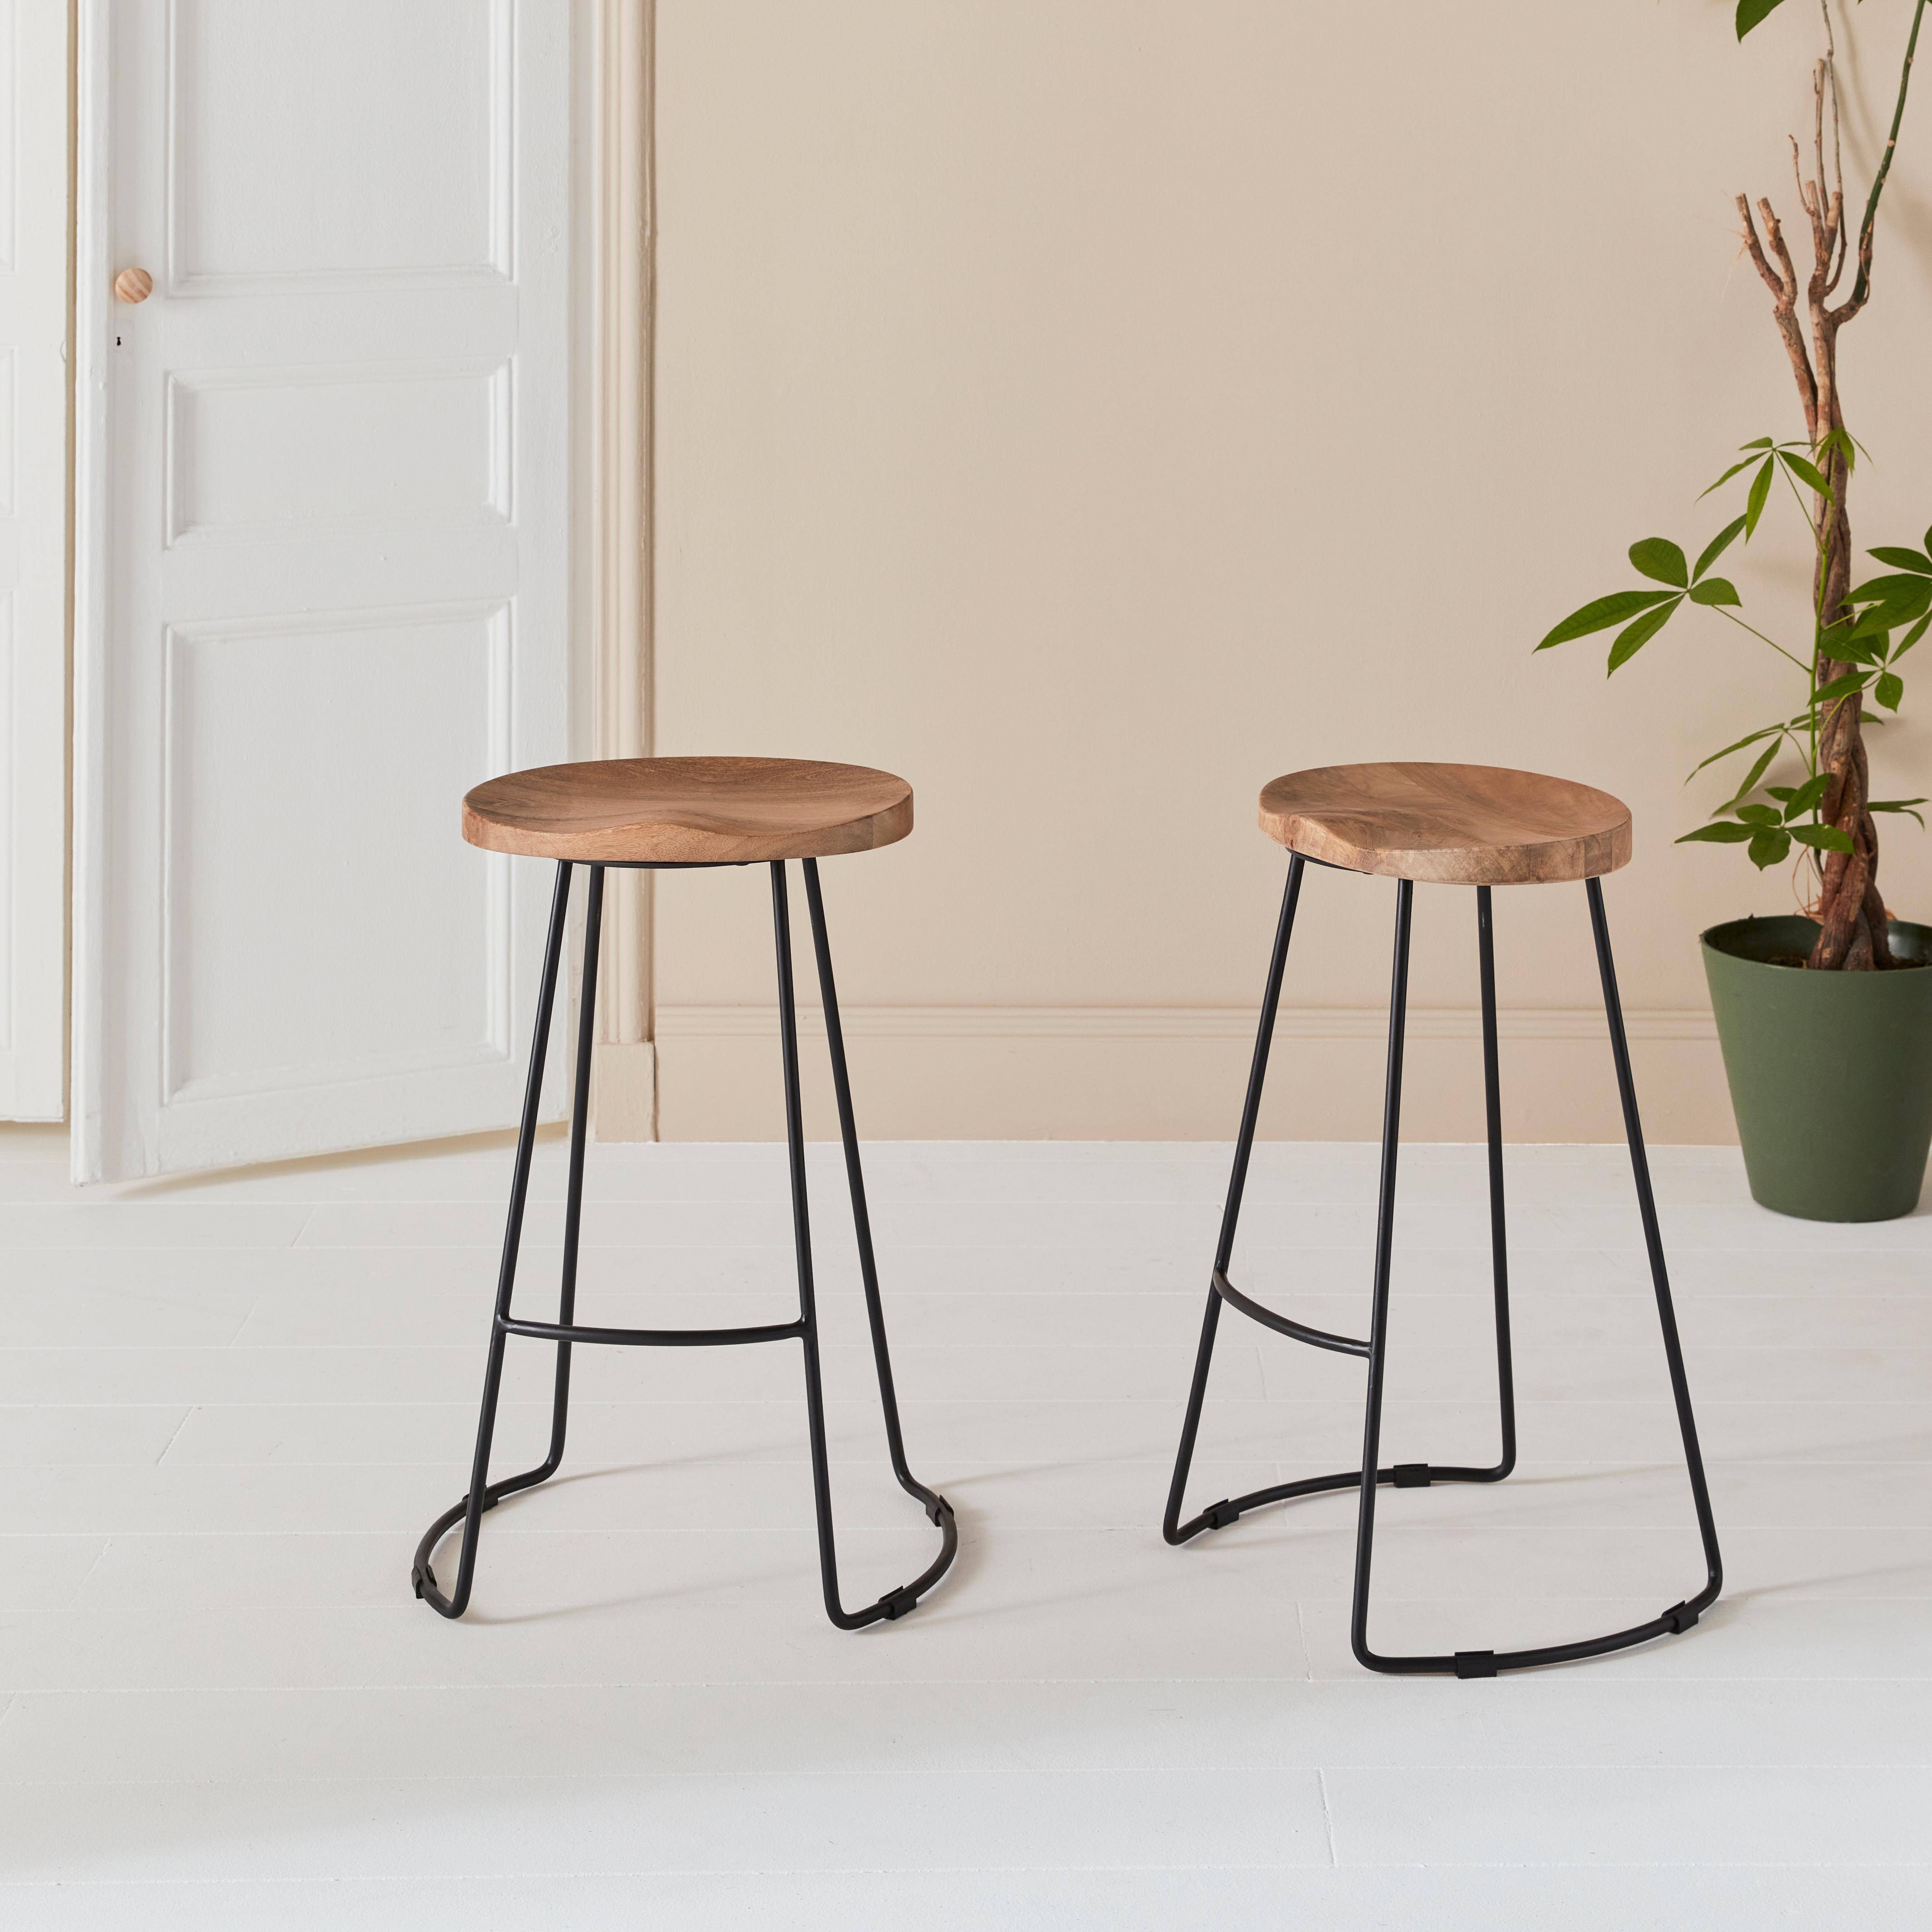 Pair of industrial metal and wooden bar stools, 44x36x65cm, Jaya, Natural, Mango wood seat, black metal legs,sweeek,Photo1